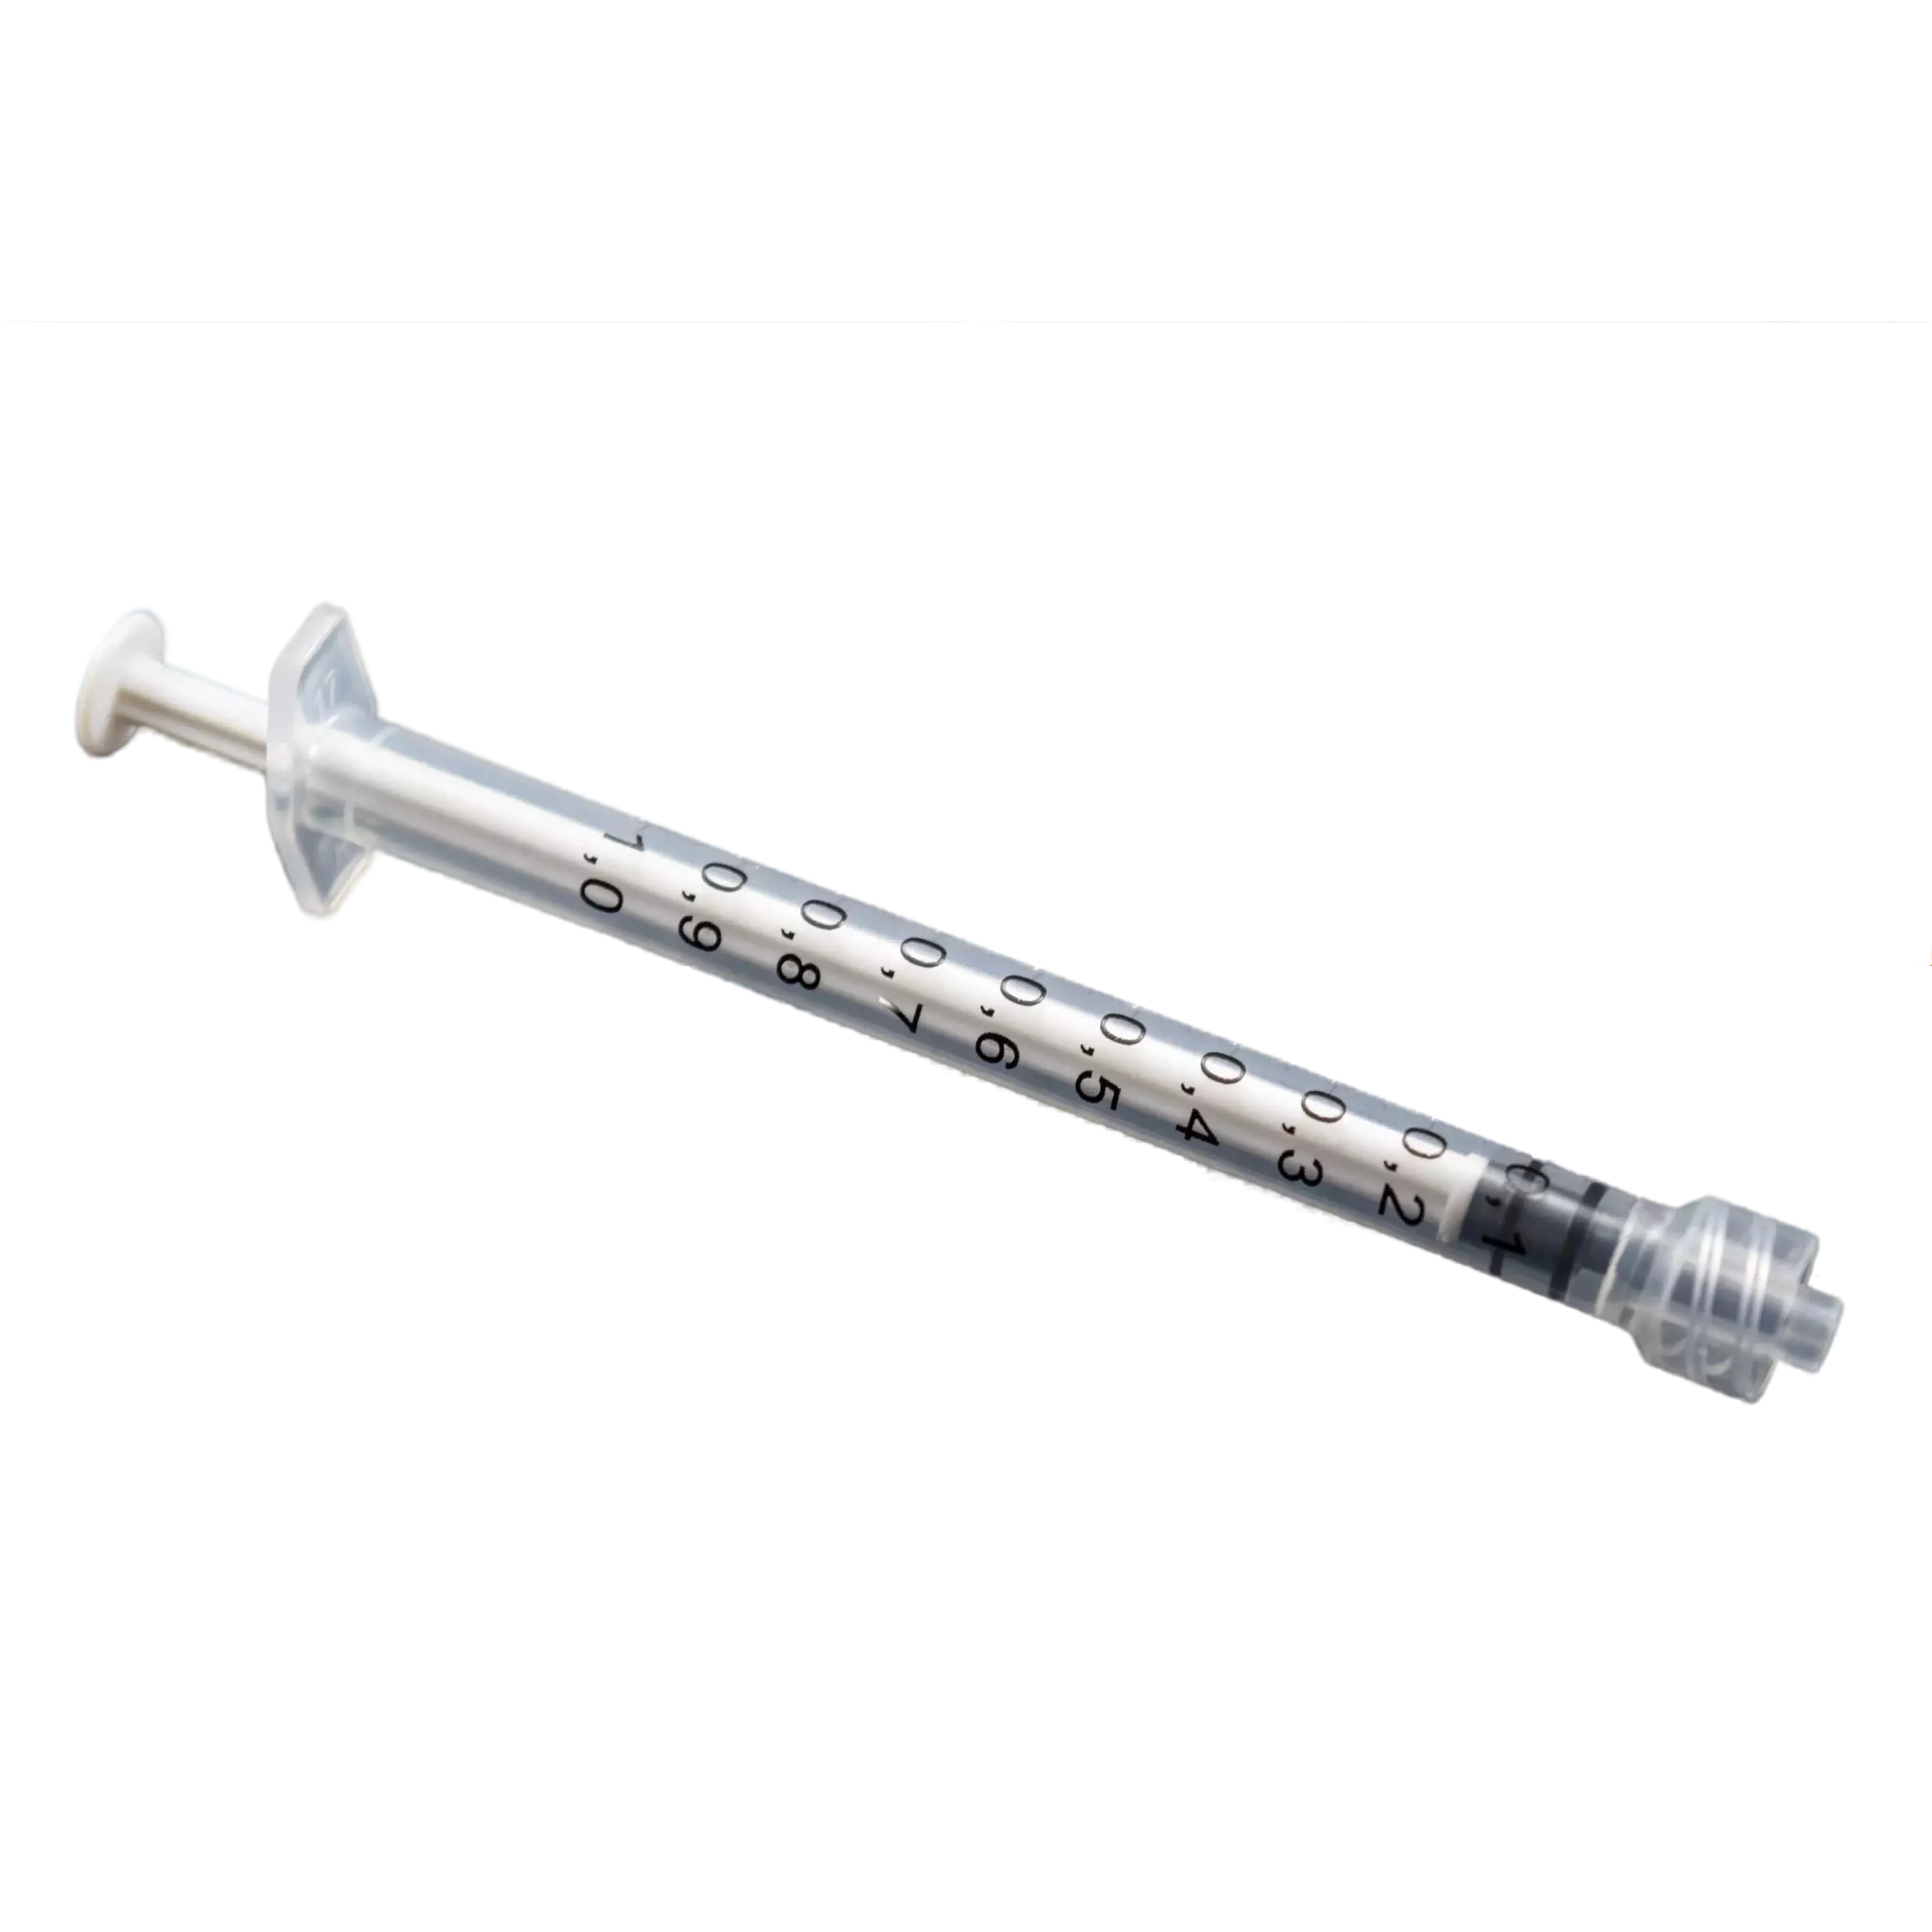 Henke-Ject Low Dead Space Luer Lock Syringe 1ml - Medical Spa Supply